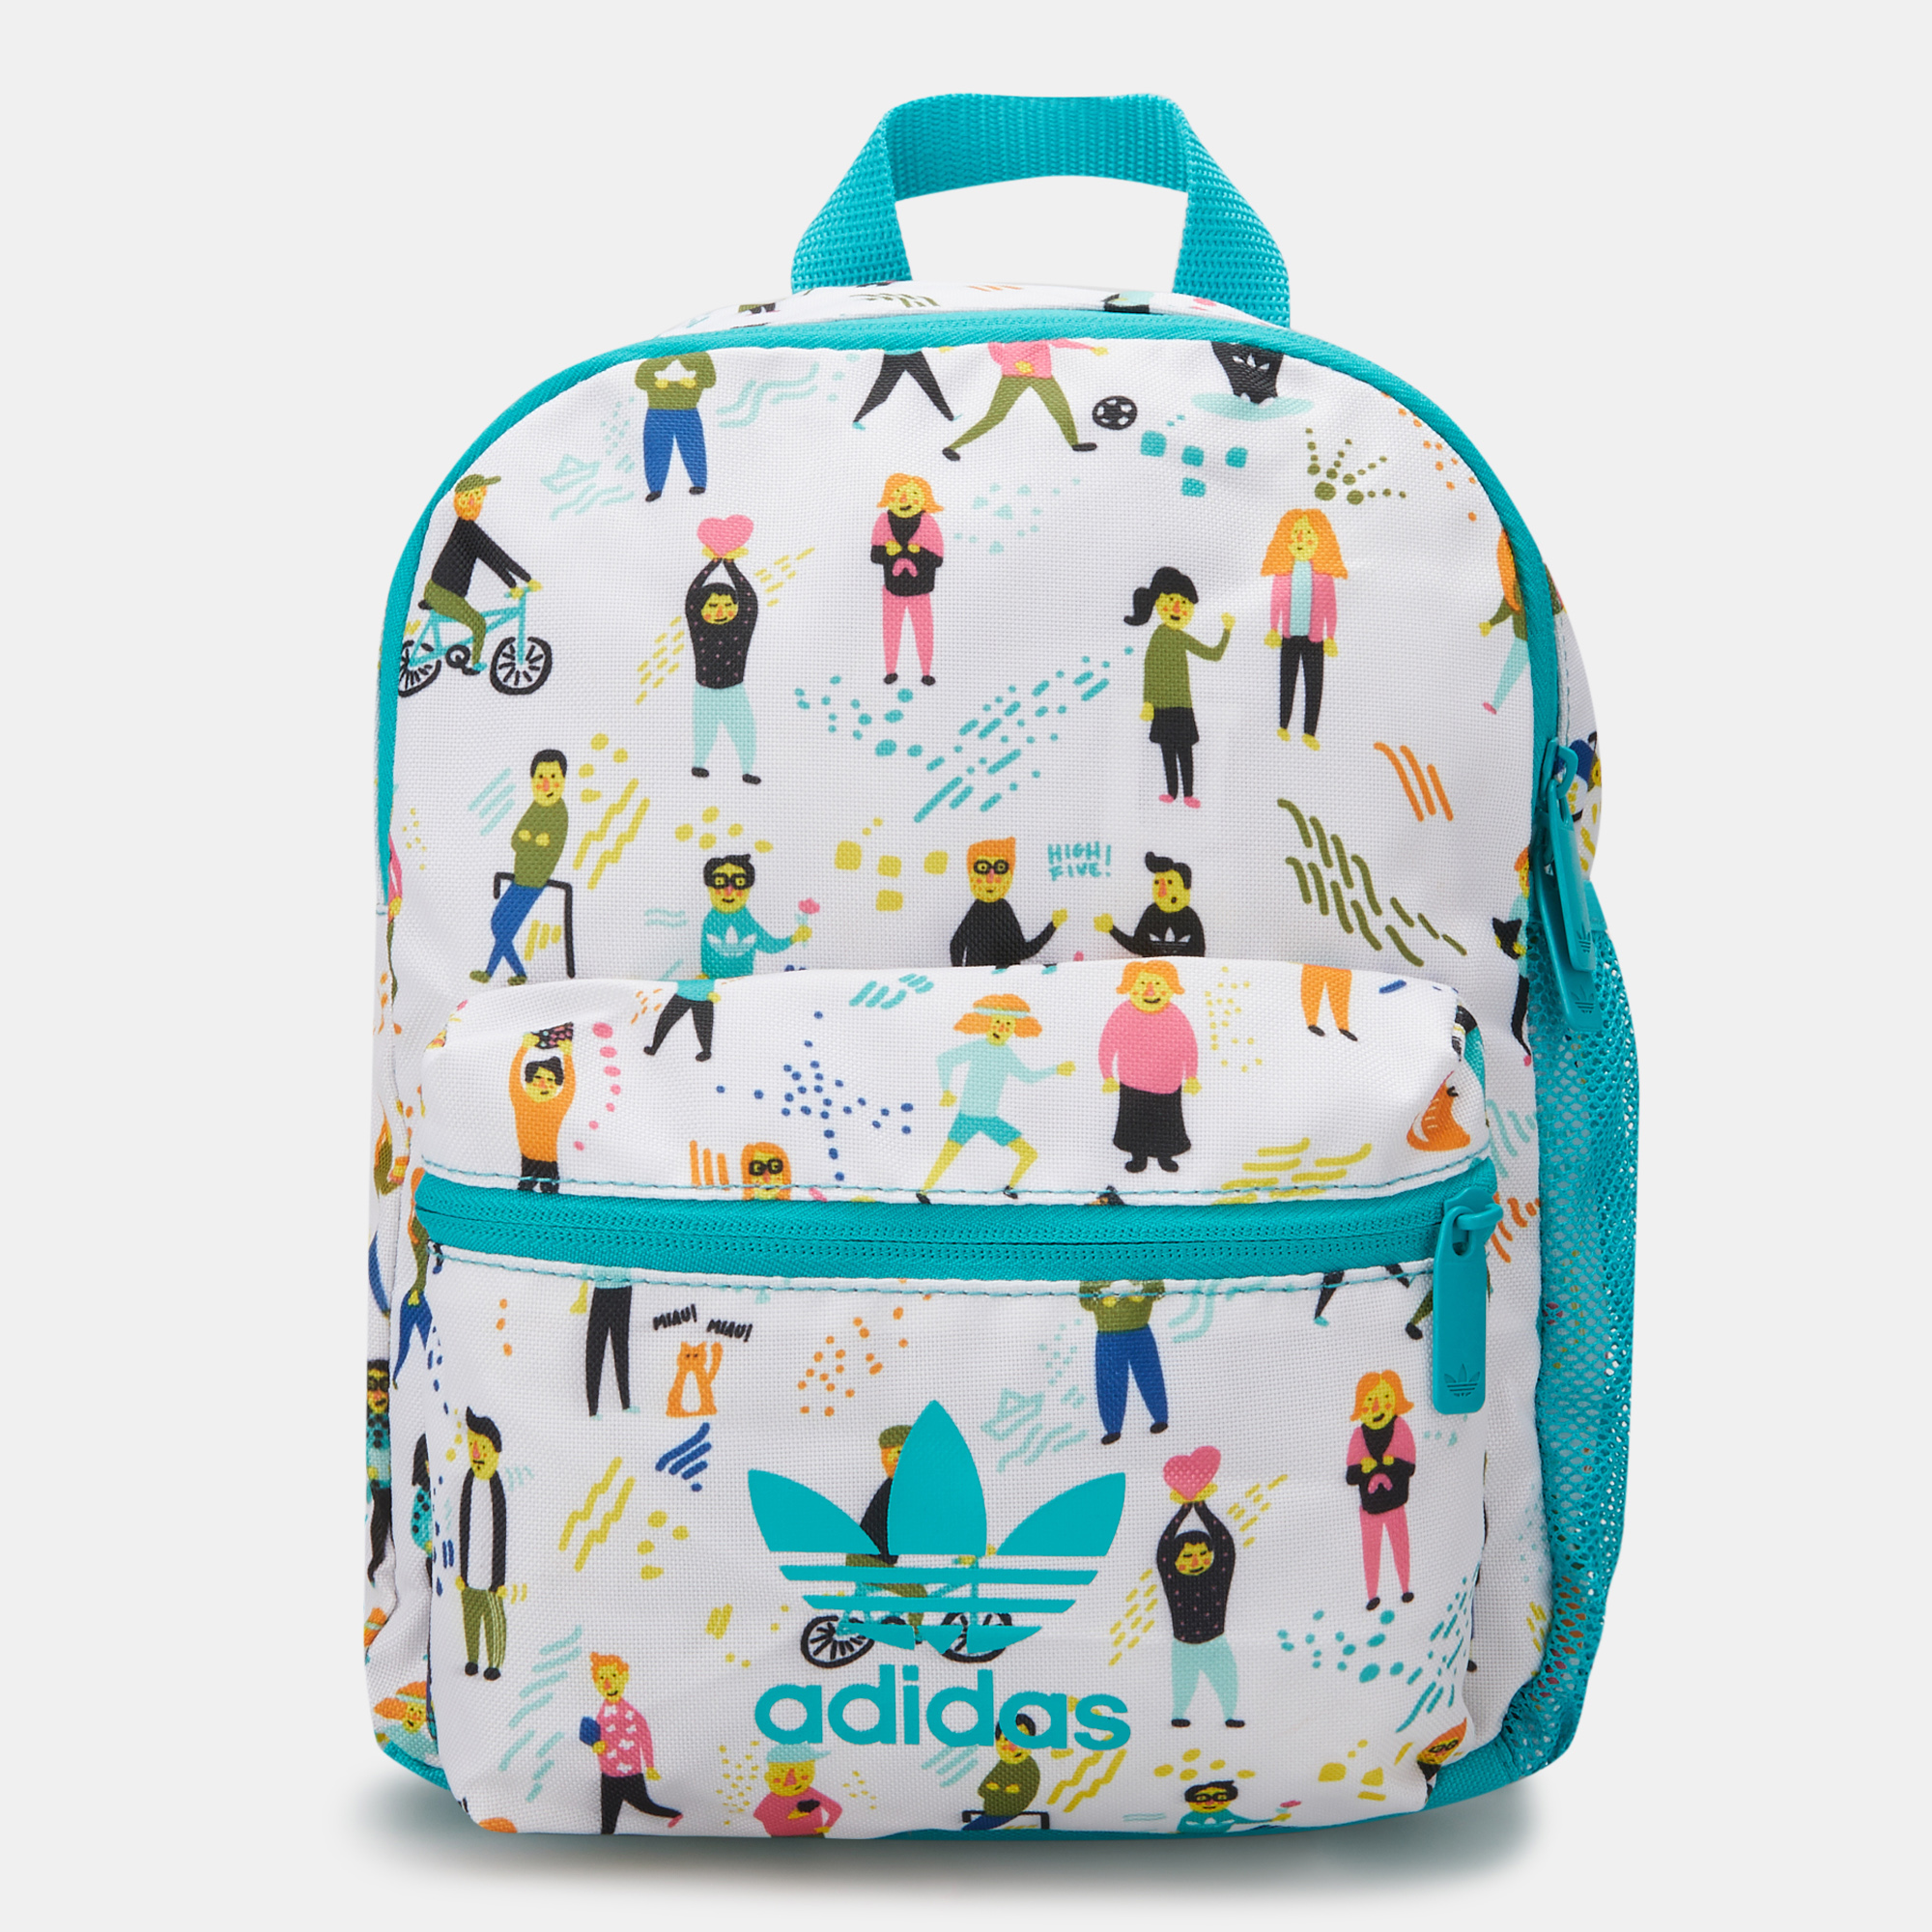 toddler adidas backpack